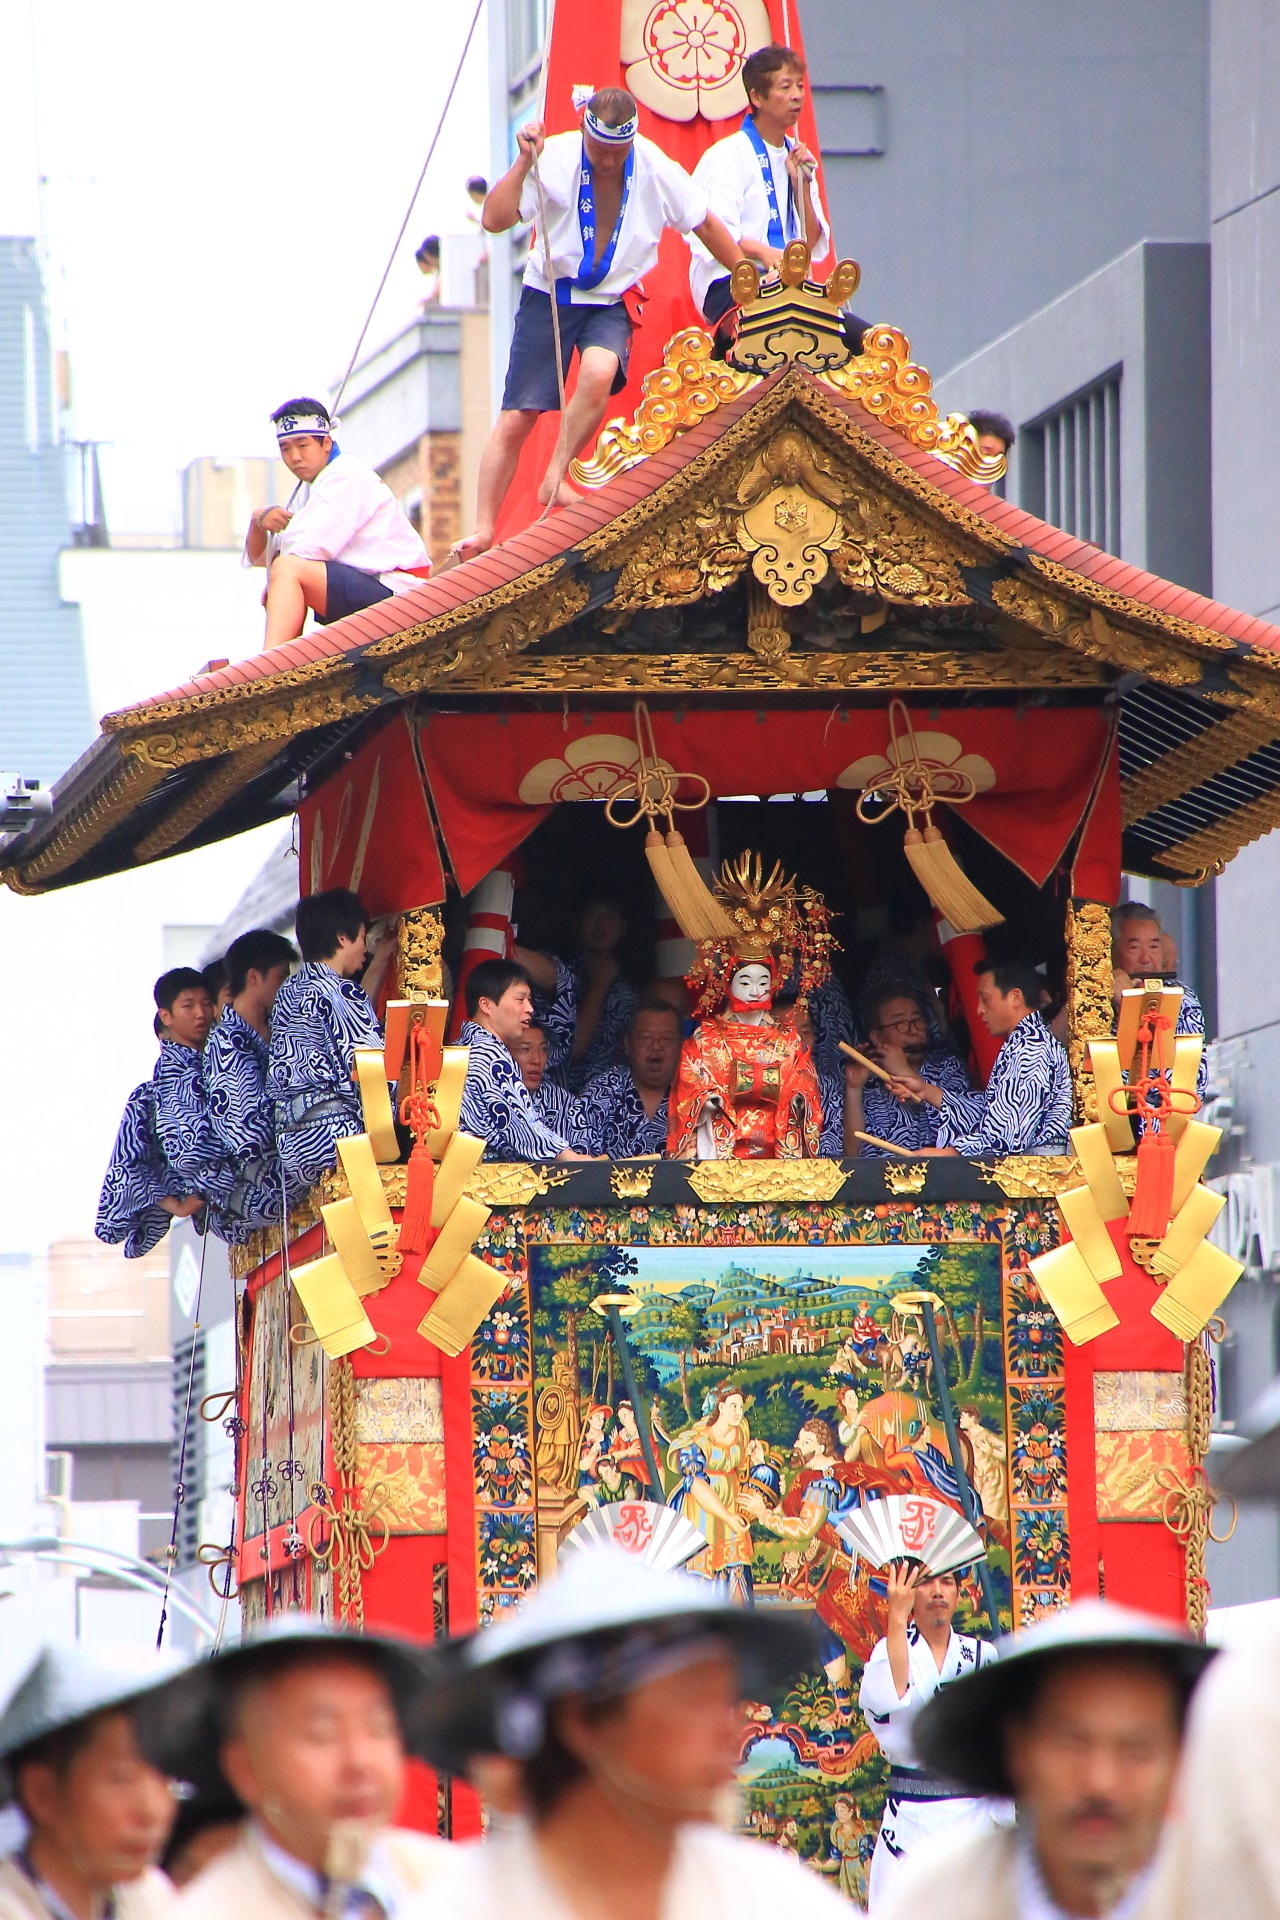 Yamahoko-Jyunko to be held at the Gion-Matsuri Festival